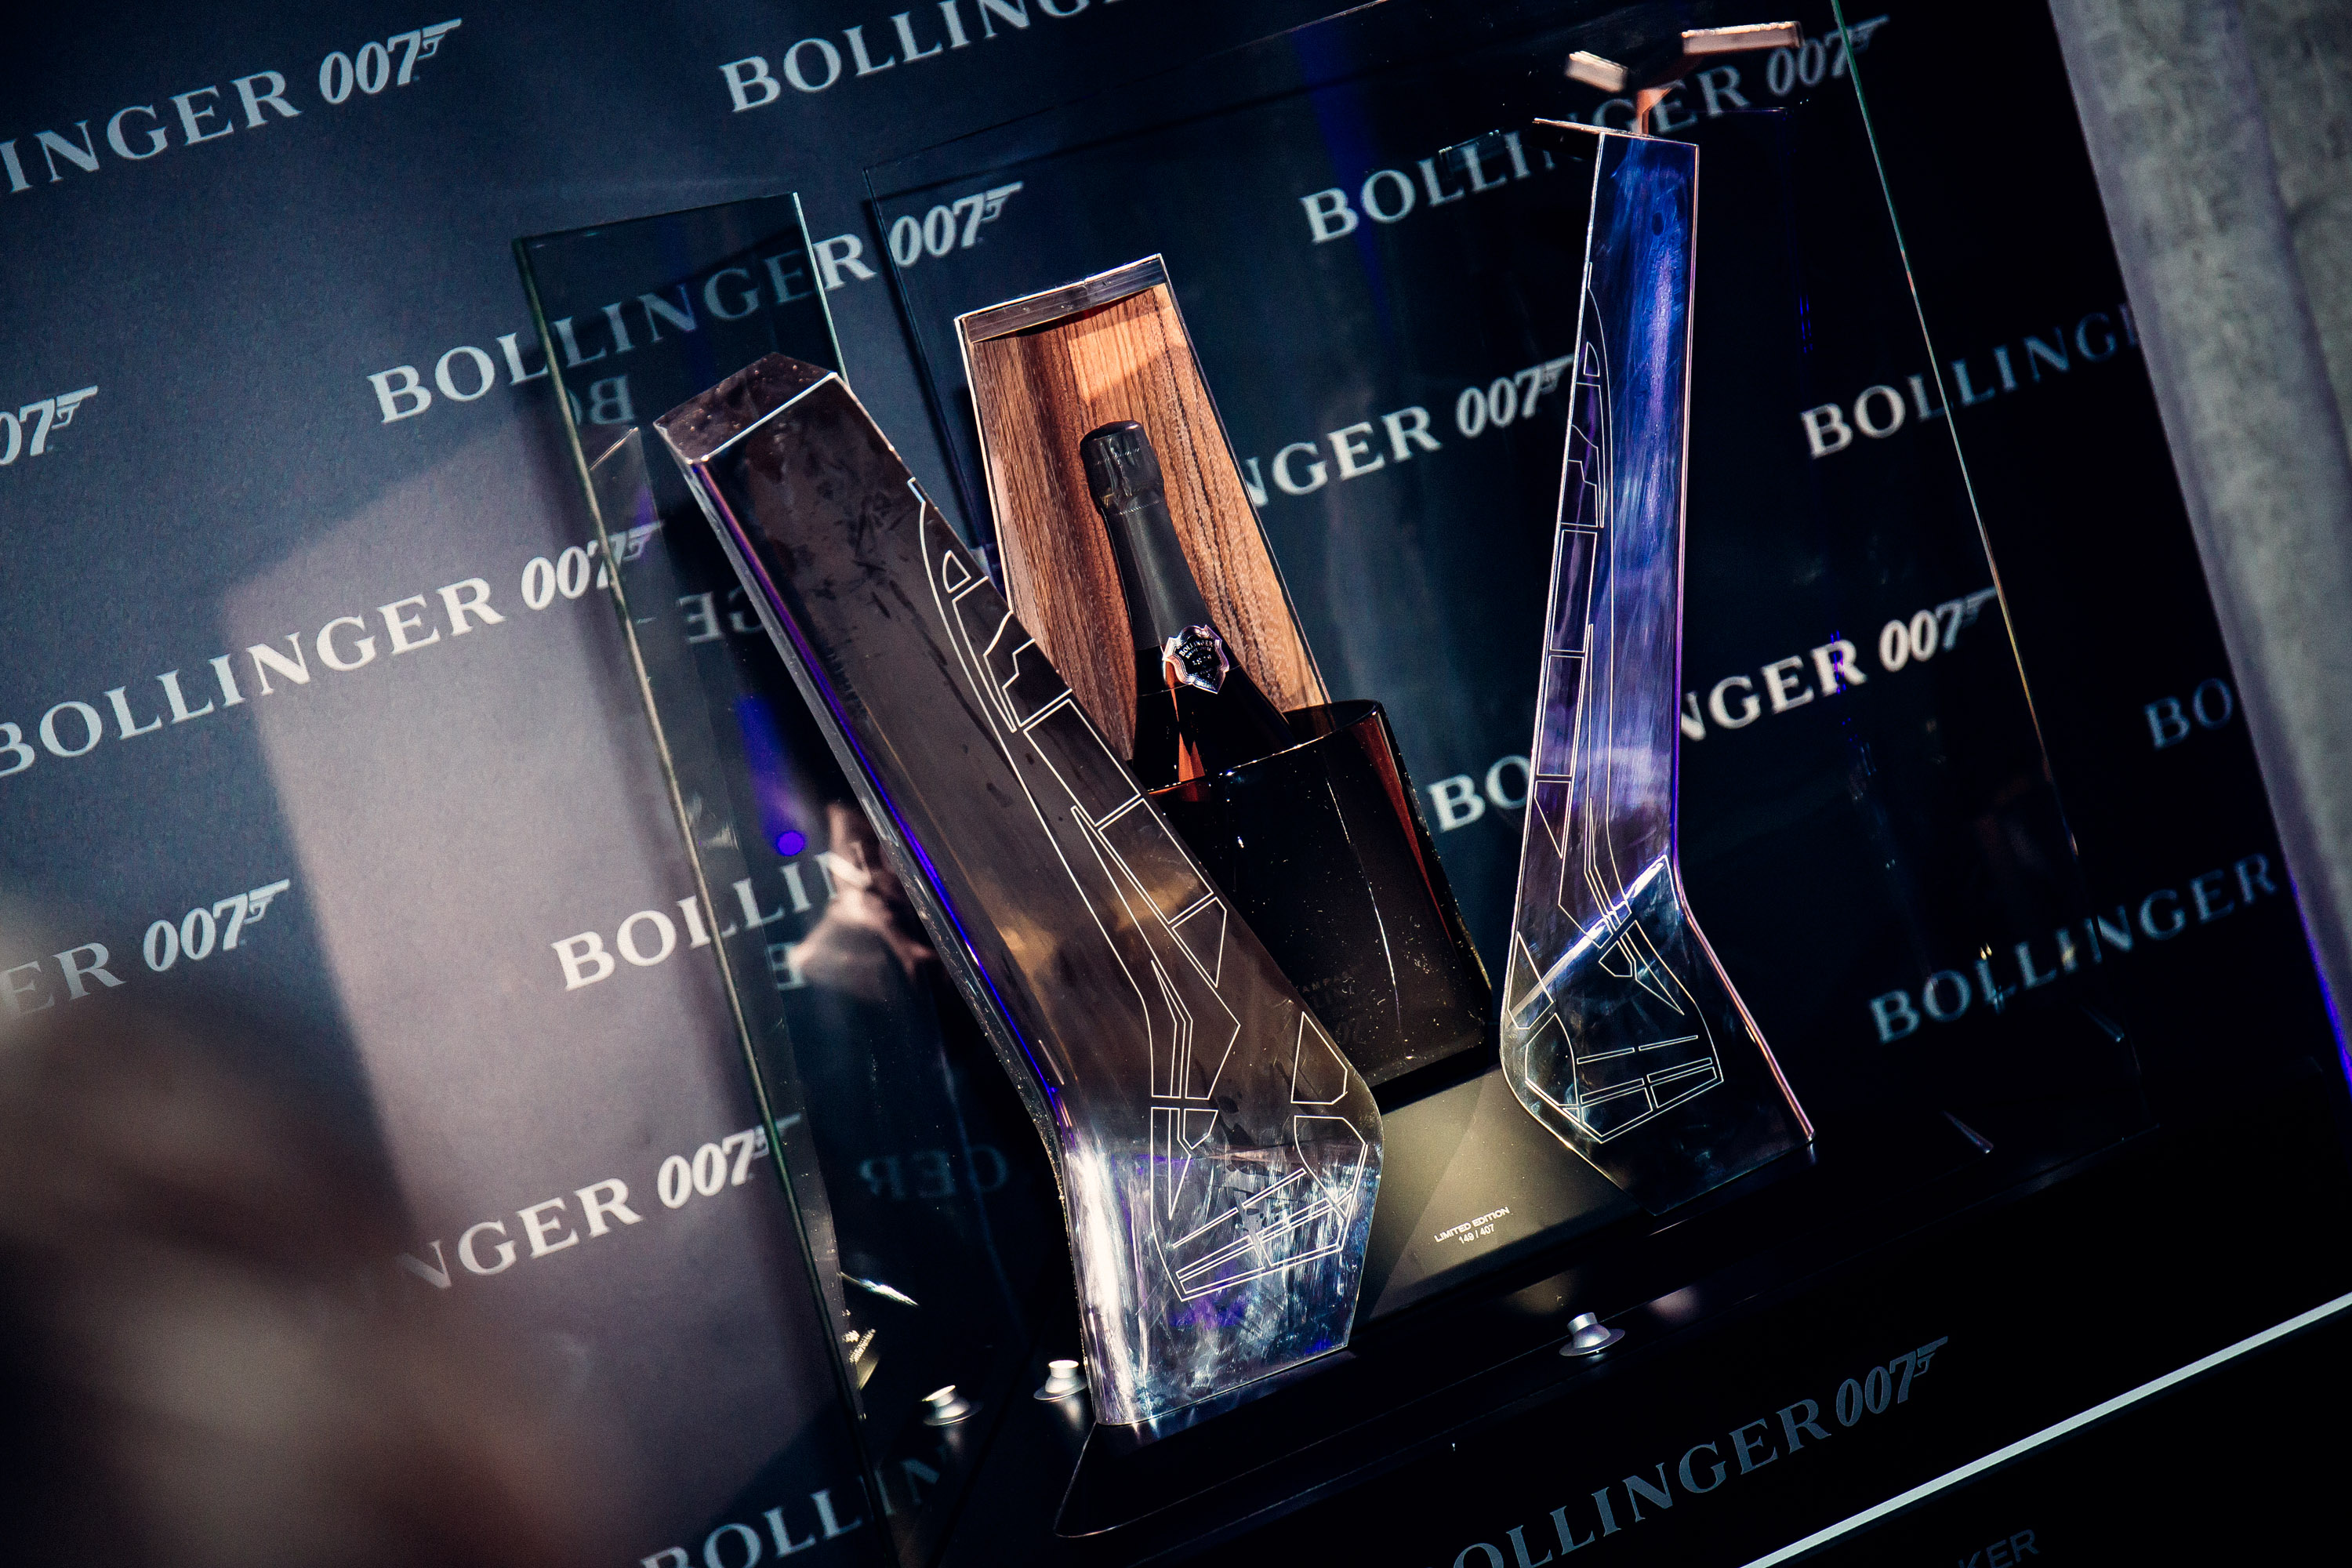 Prime Bond: Bollinger Champagne’s latest 007 affair